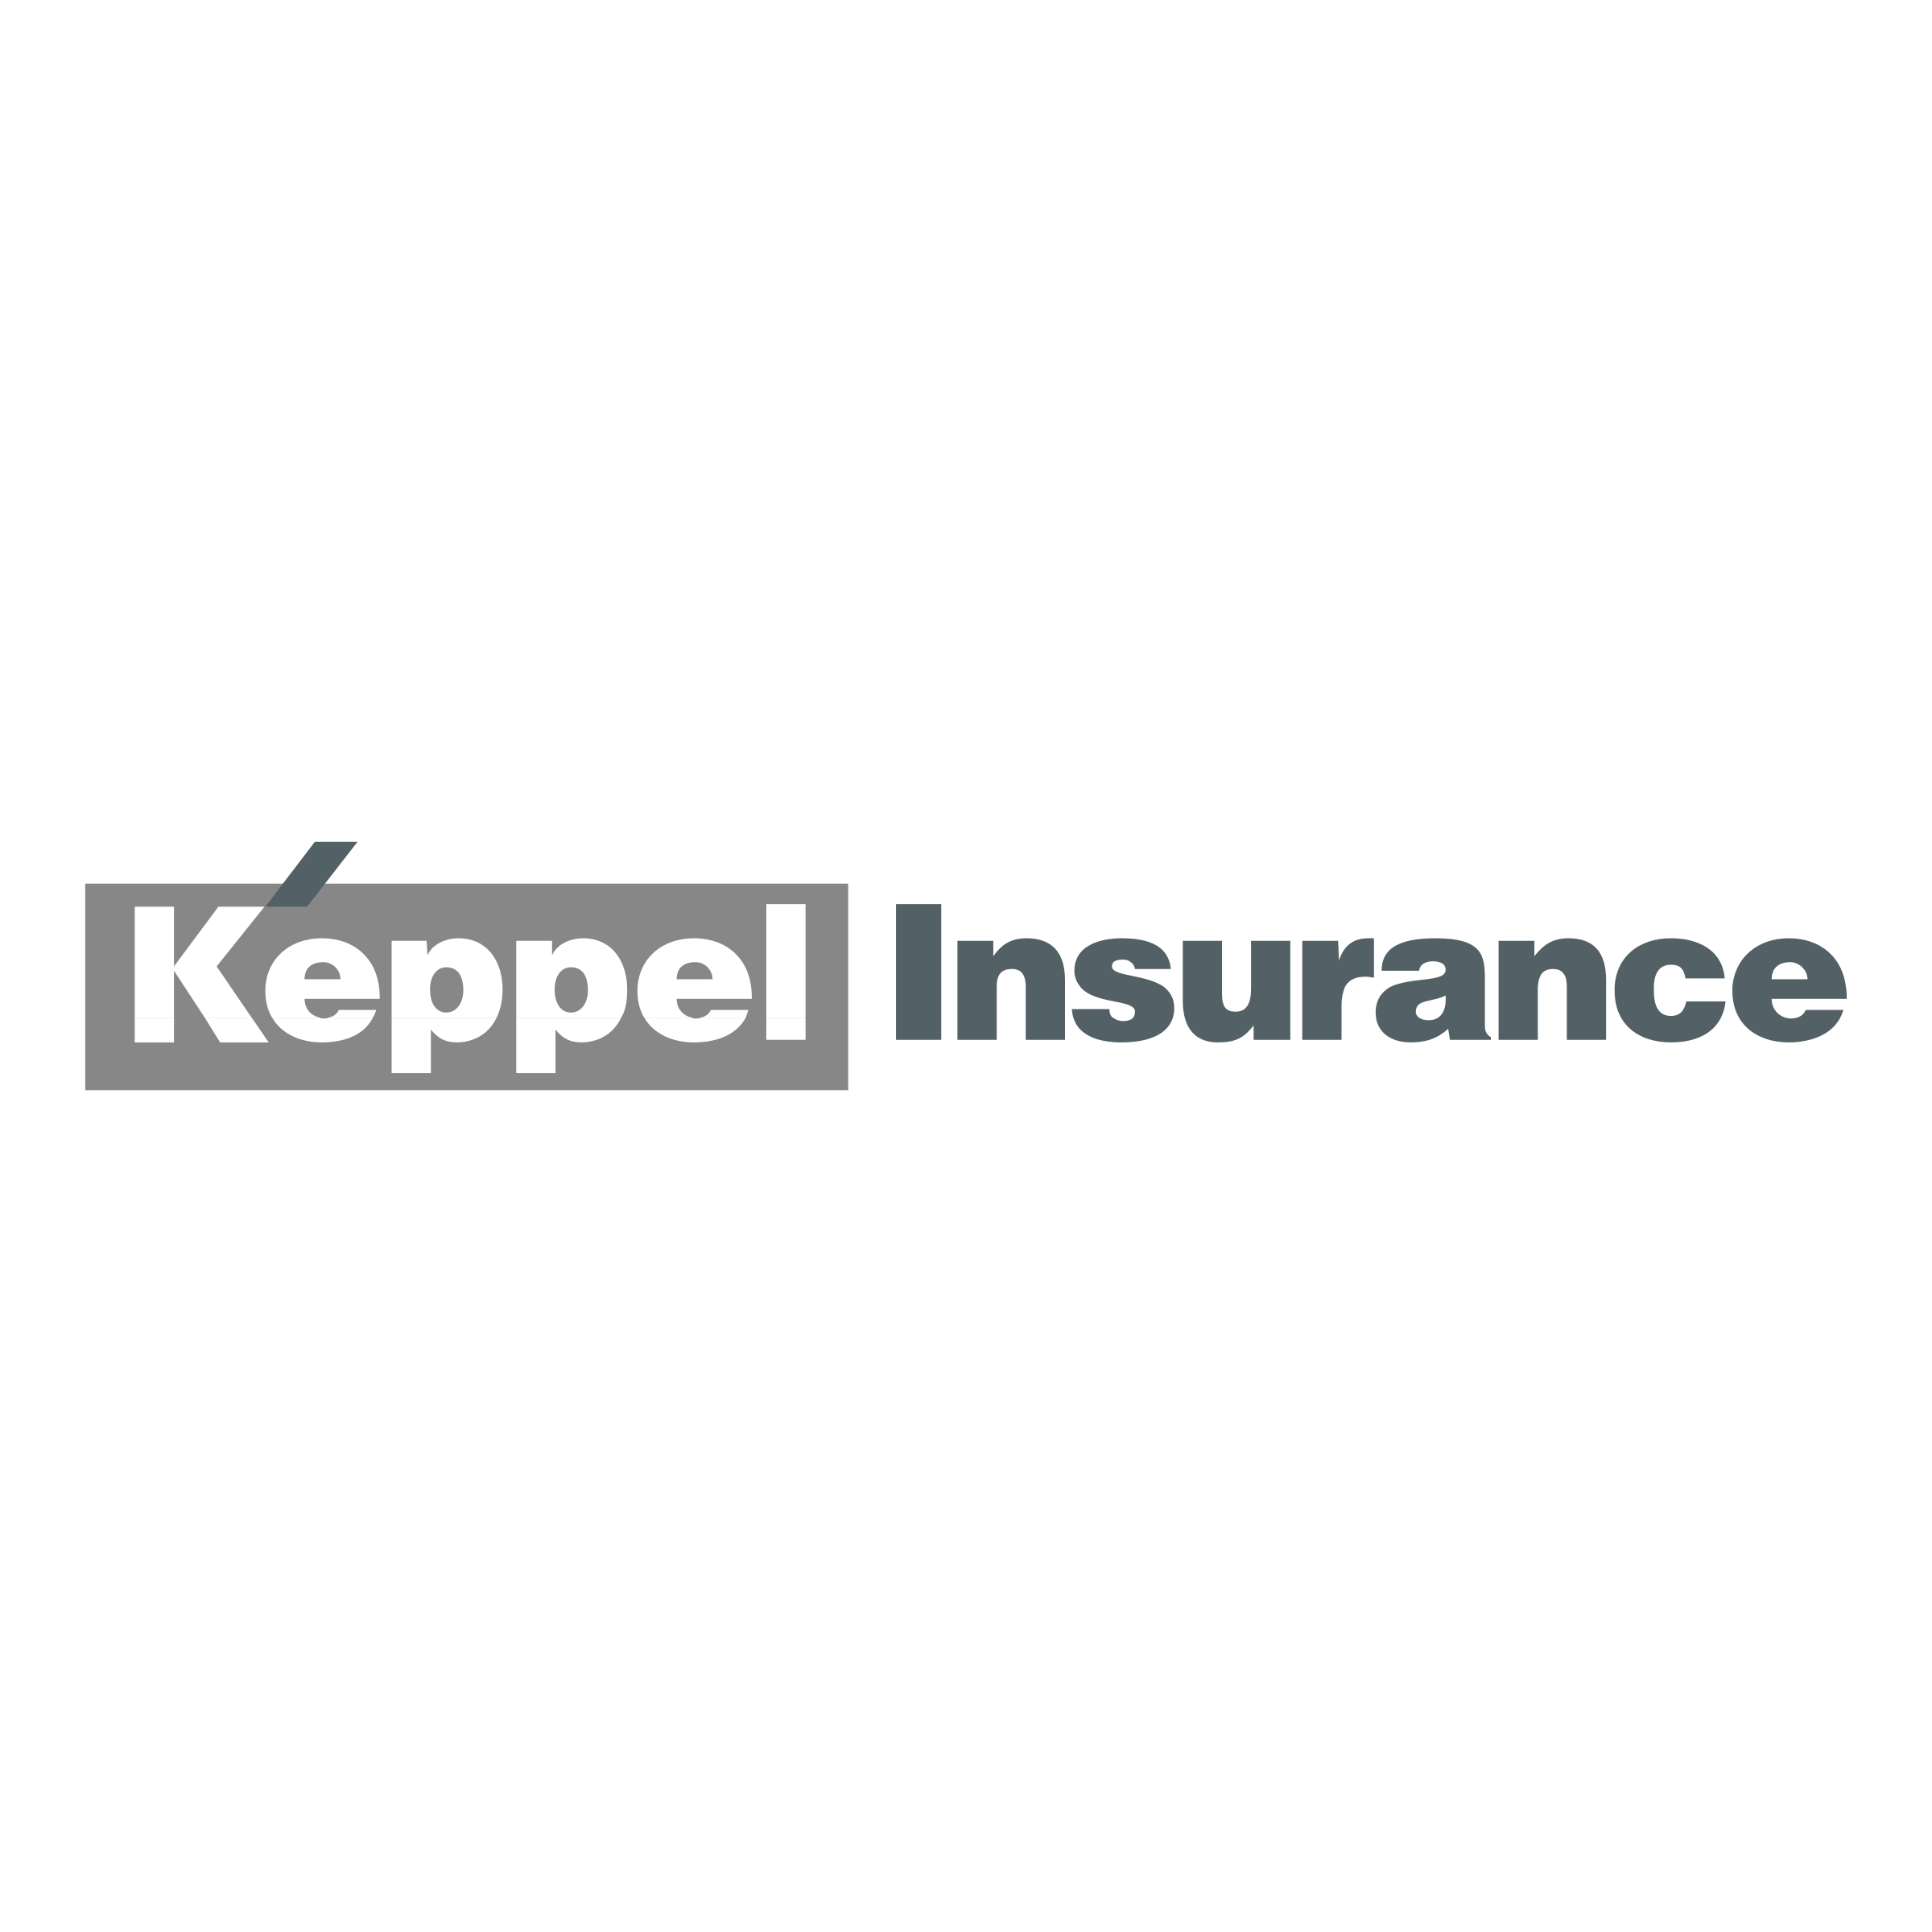 Keppel Logo - Keppel Insurance Logo PNG Transparent & SVG Vector